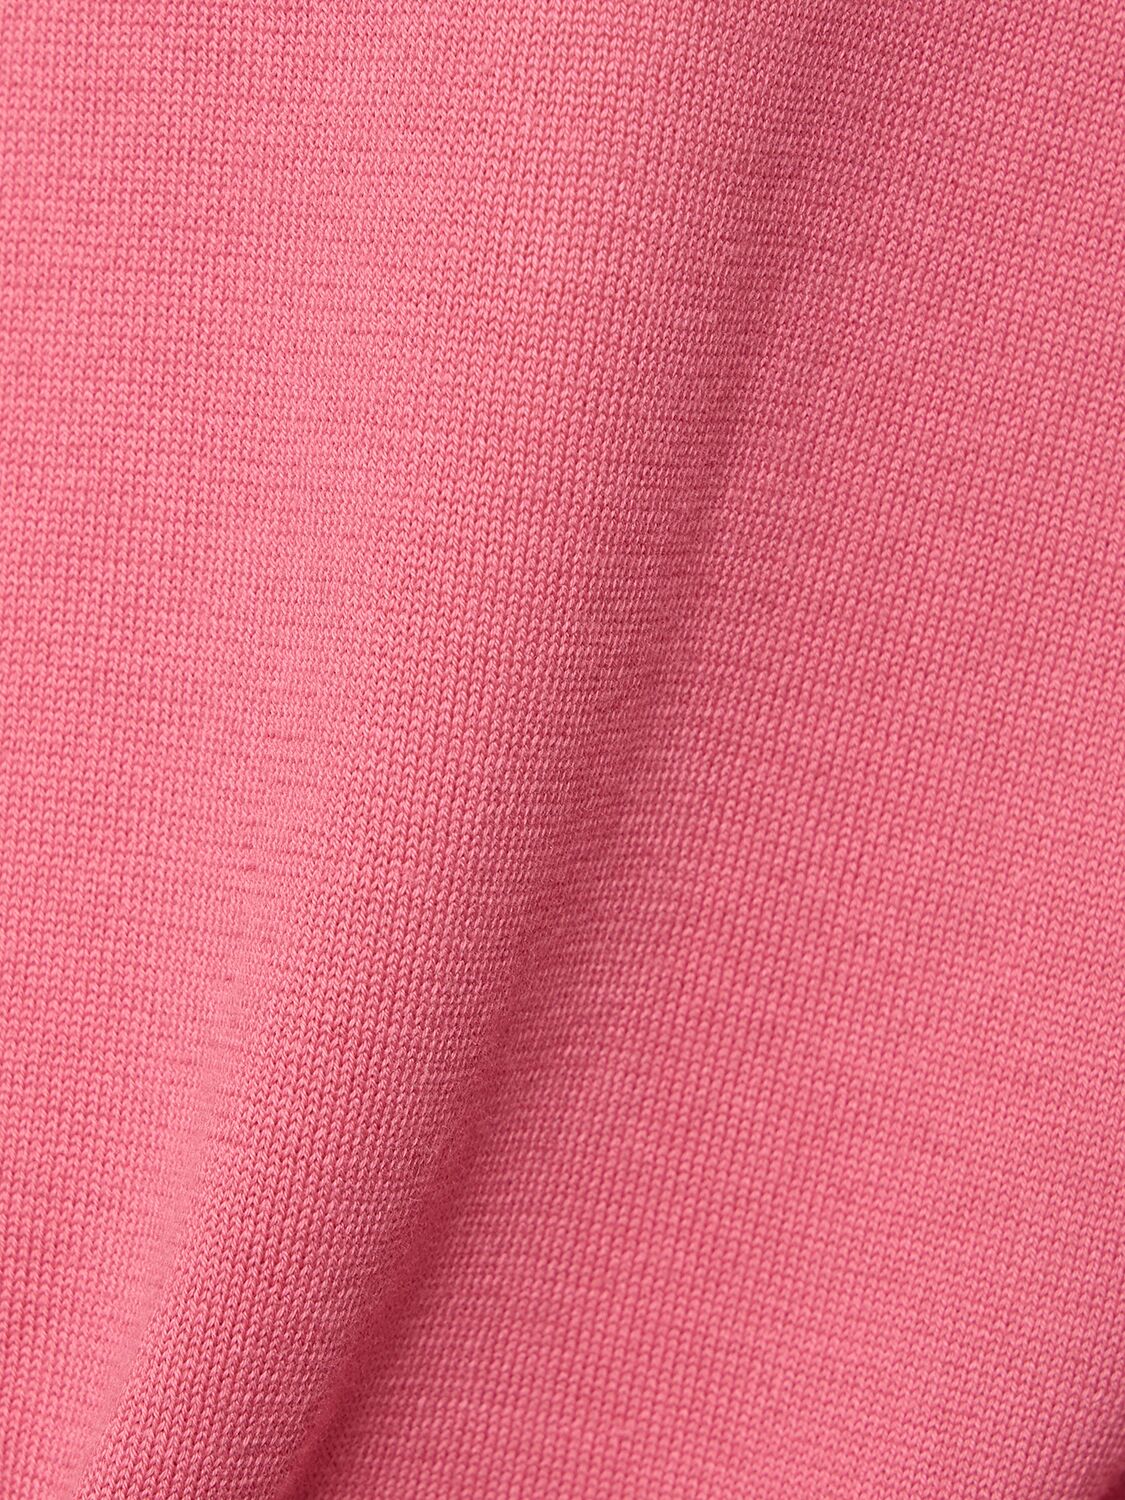 Shop Tom Ford Superfine Cotton Crewneck Sweater In Flamingo